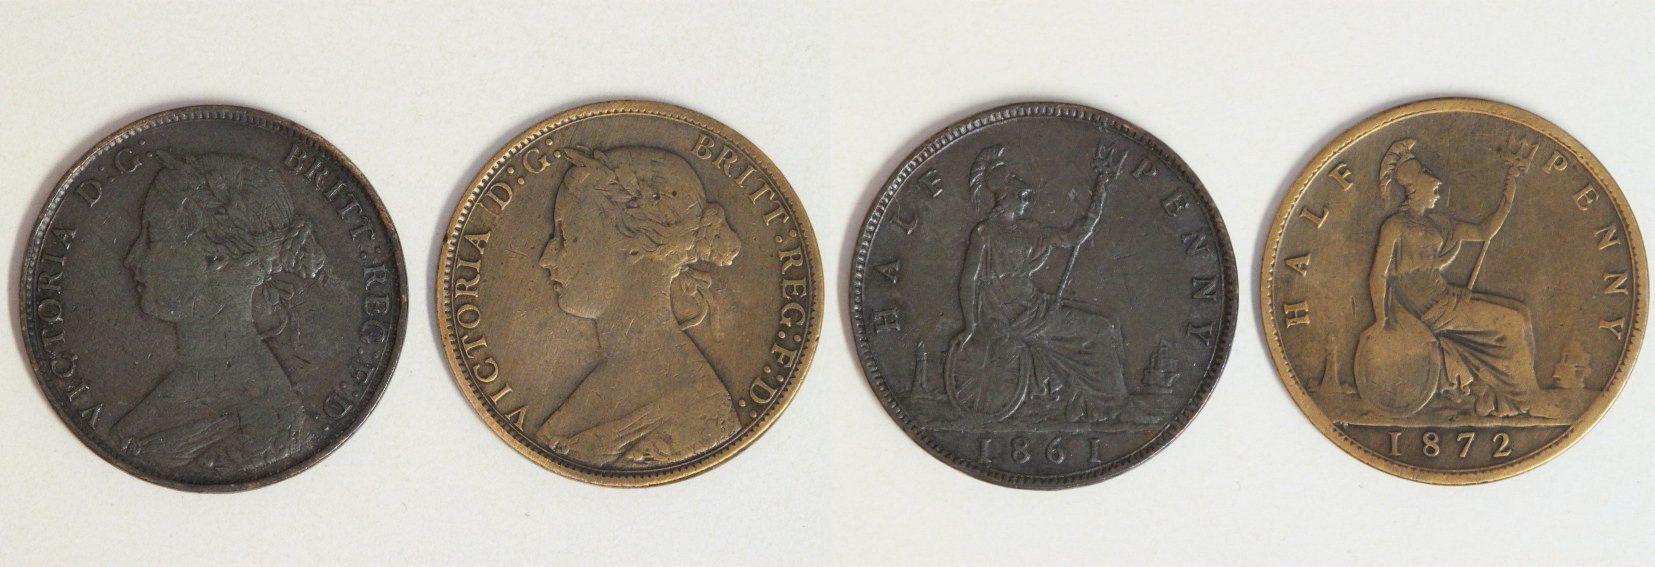 Foto Großbritannien Lot 1/2 Penny 1861/72